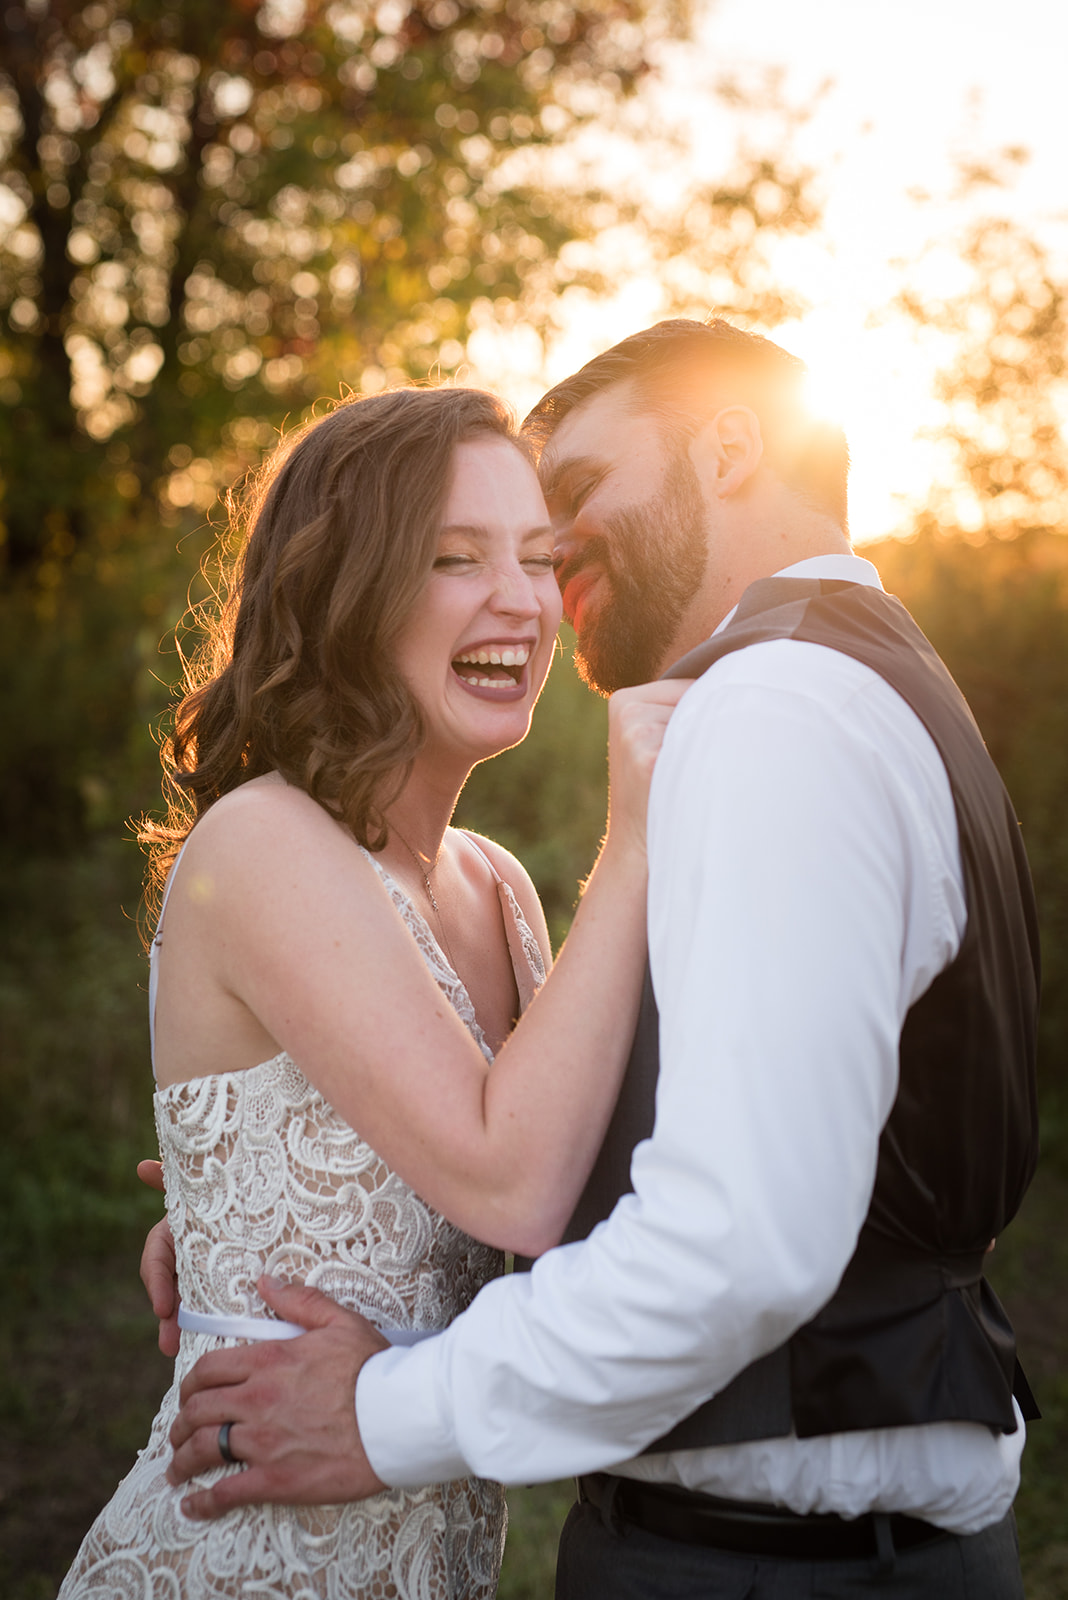 Groom kisses his bride during golden hour sunset photos at Erickson Farmstead captured by Minnesota wedding photographer